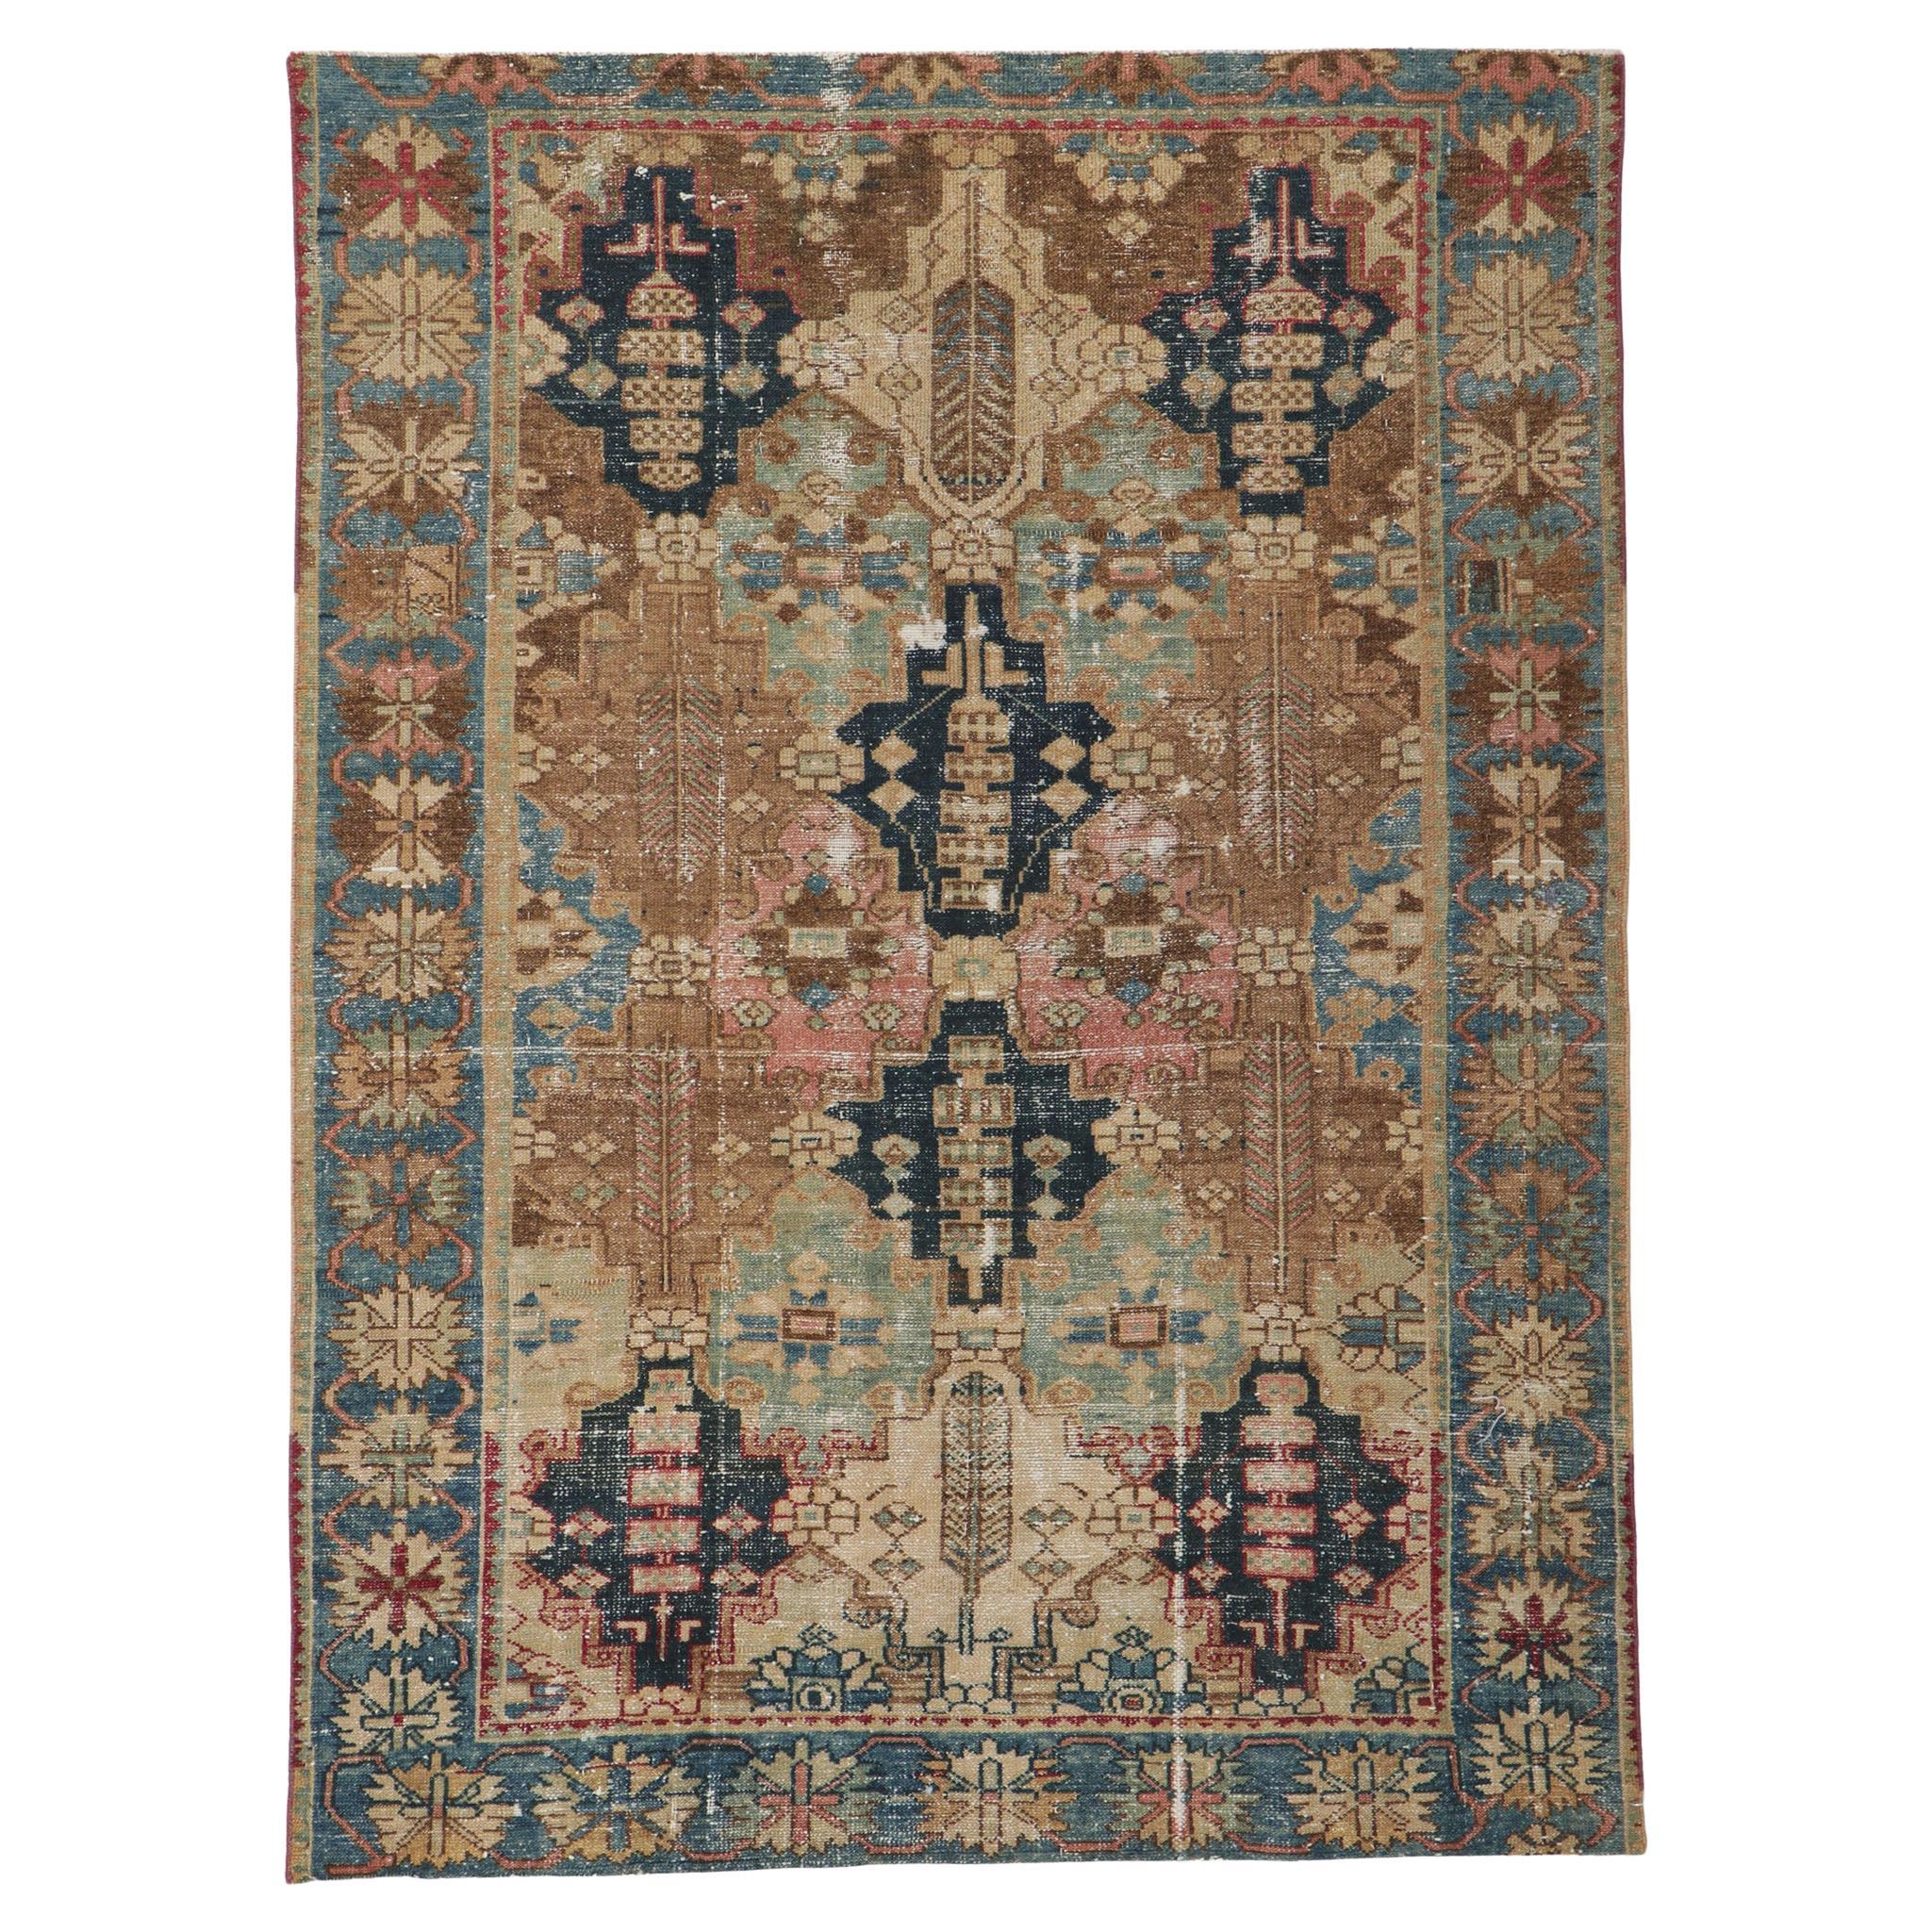 https://a.1stdibscdn.com/distressed-antique-persian-bakhtiari-rug-for-sale/f_9429/f_282601321650071338317/f_28260132_1650071339620_bg_processed.jpg